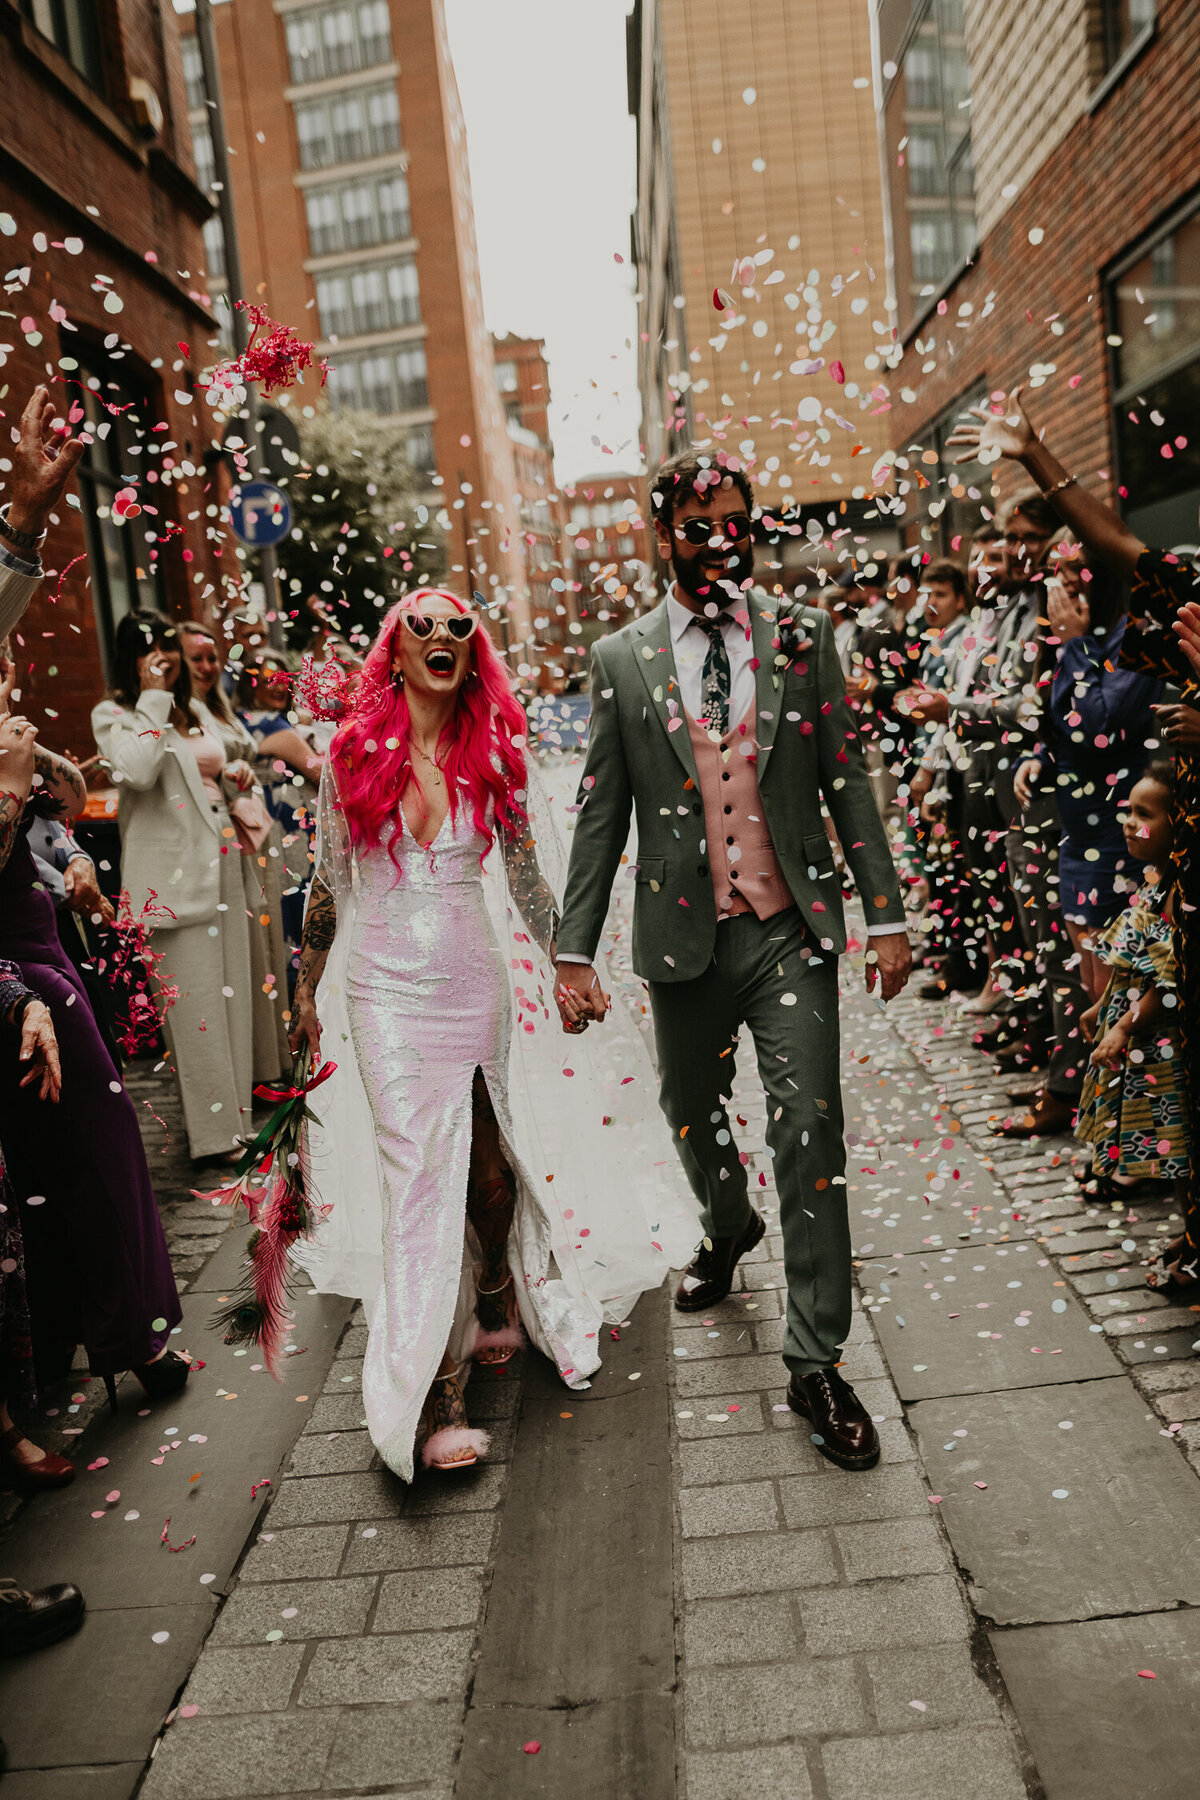 Tattooed wedding couple walk through a confetti line at their Manchester wedding venue.